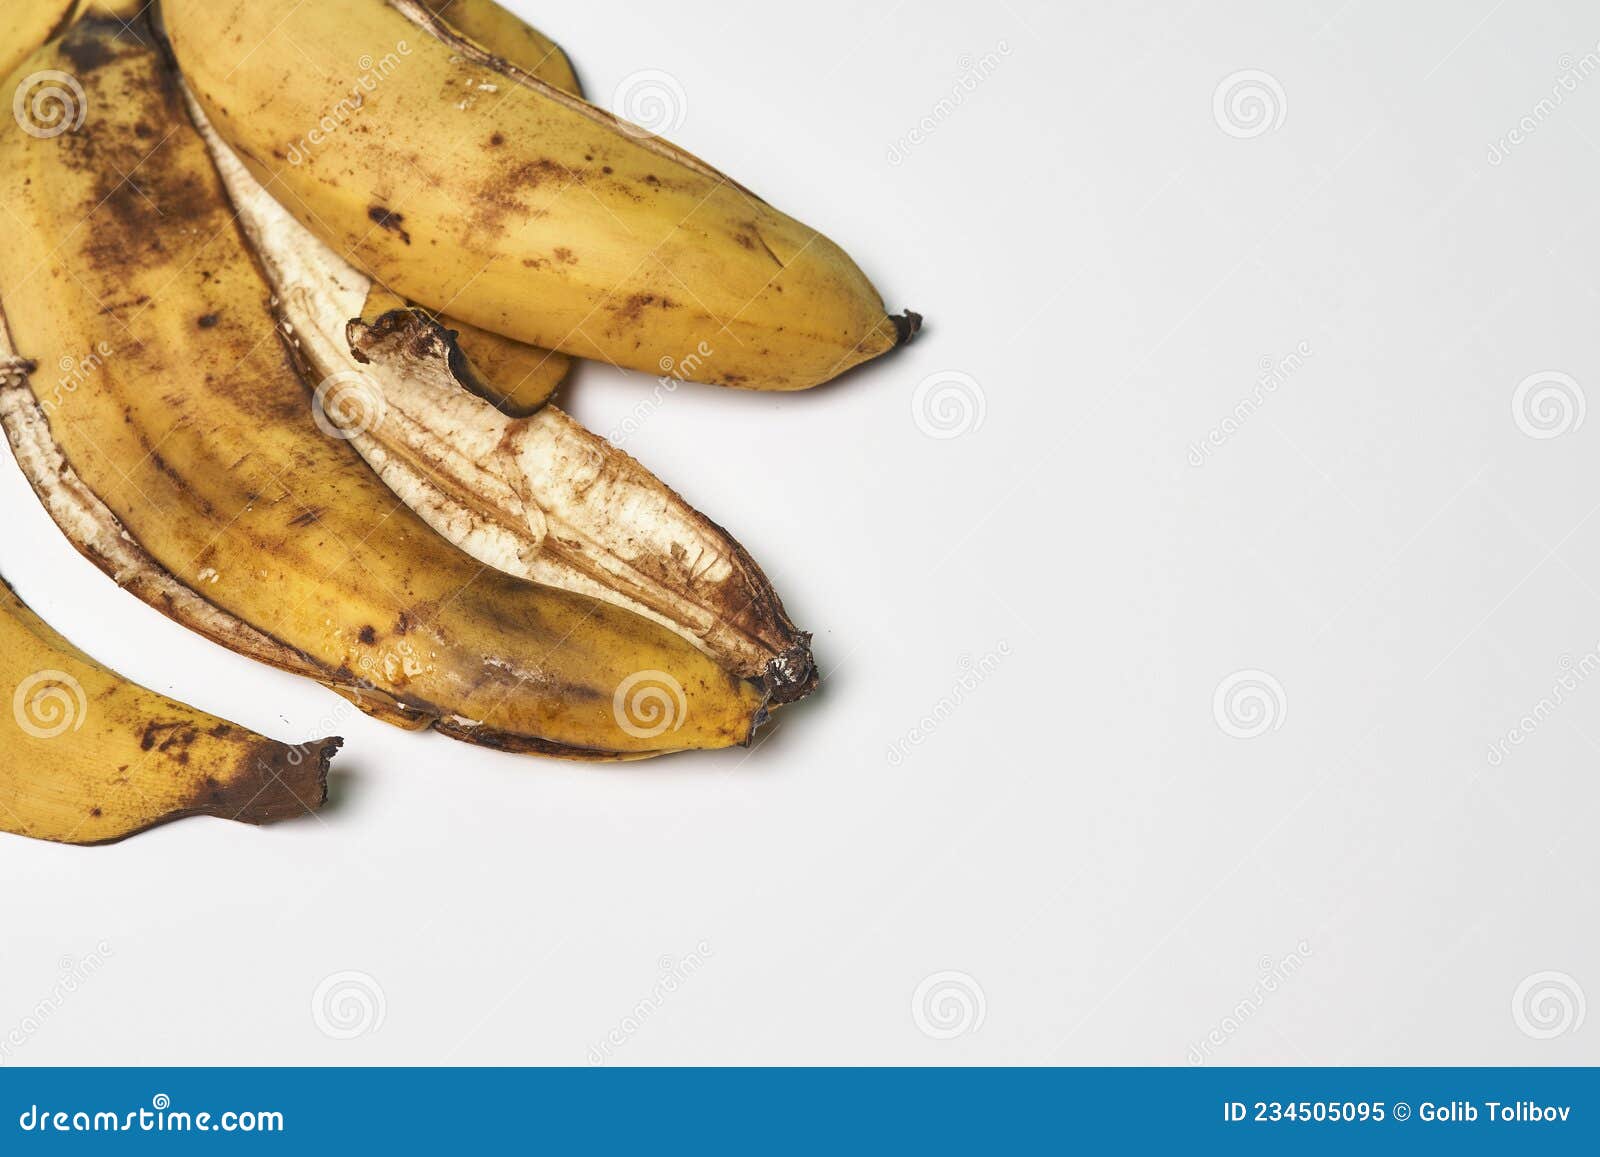 Banana Peels or Banana Skin Stock Image - Image of vegetarian, peeled:  234505095